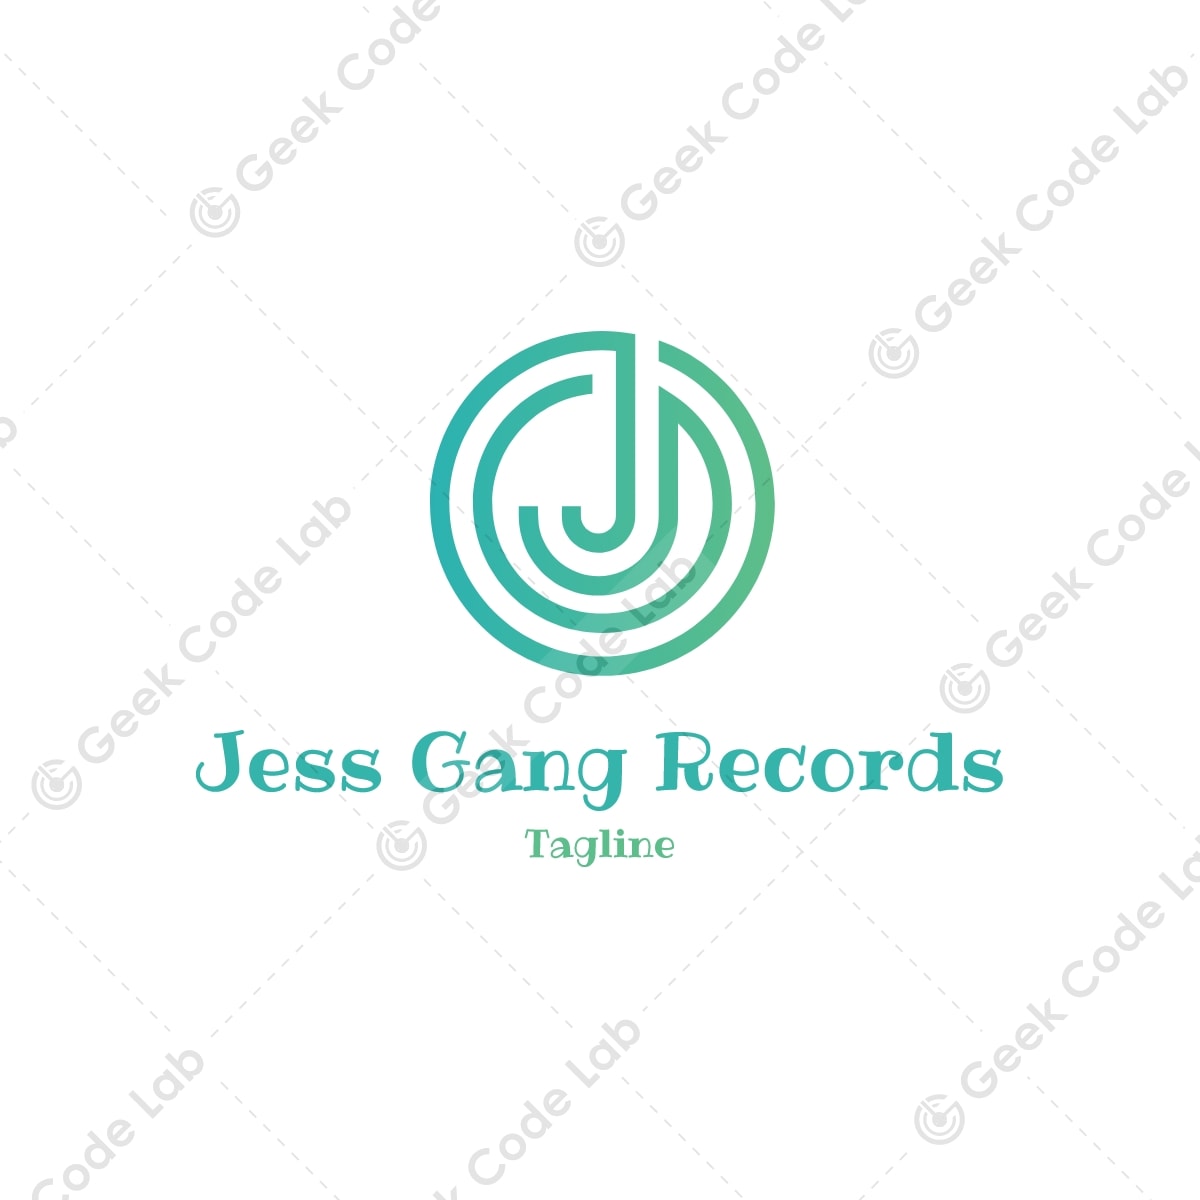 Jess Gang Records